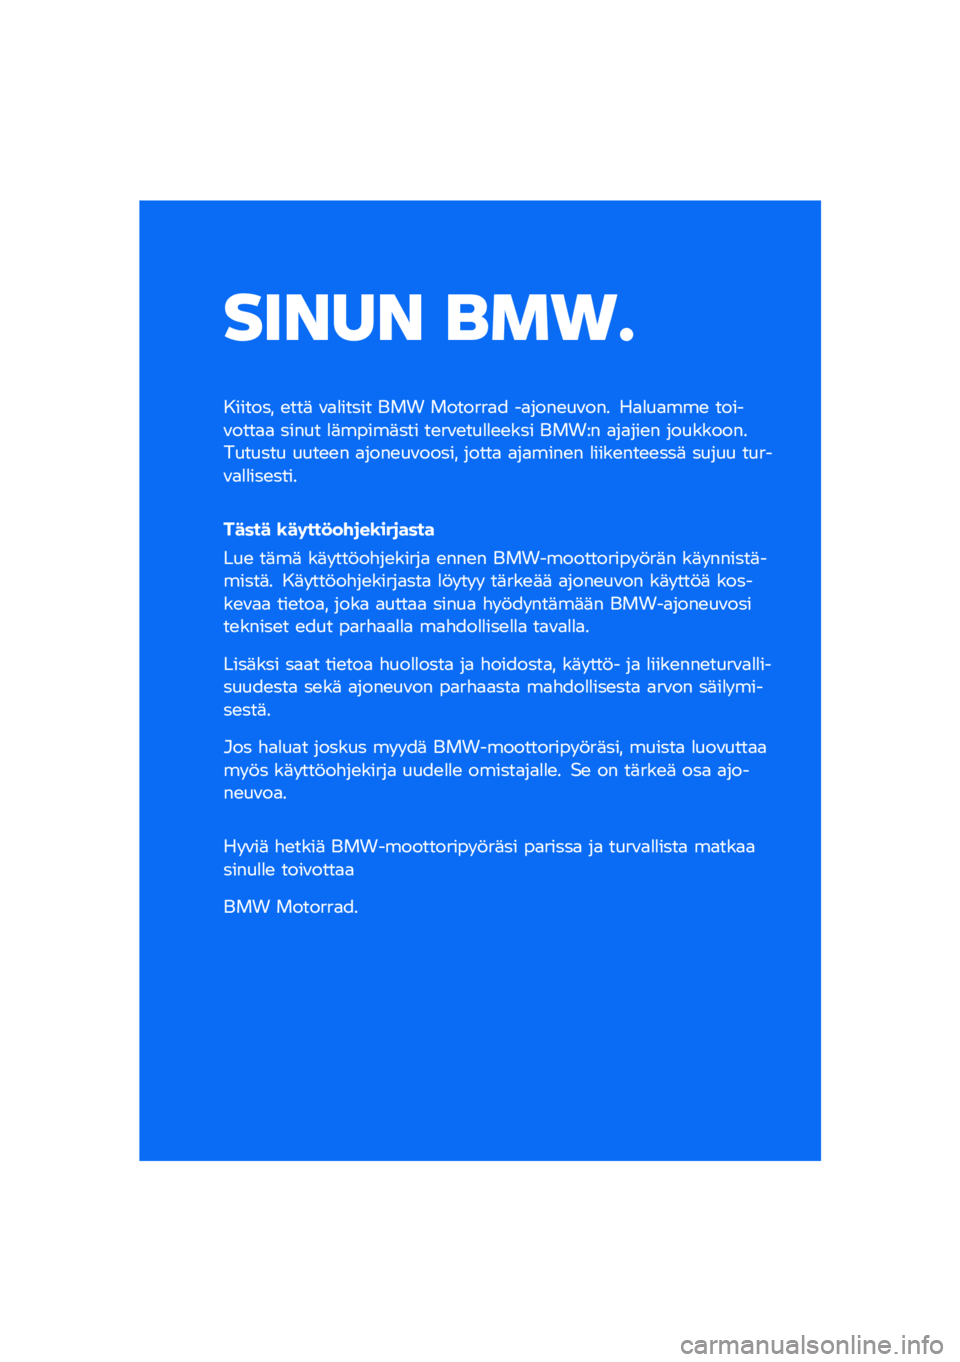 BMW MOTORRAD R NINE T SCRAMBLER 2020  Käsikirja (in Finnish) ����� ���\b�	
������� �\b���	 �\f�
�
����� ��� �������
� ��
����\b��\f��� ��
�
��
���\b �����\f����
�
 ����� �
�	�����	��� ��\b��\f�\b�